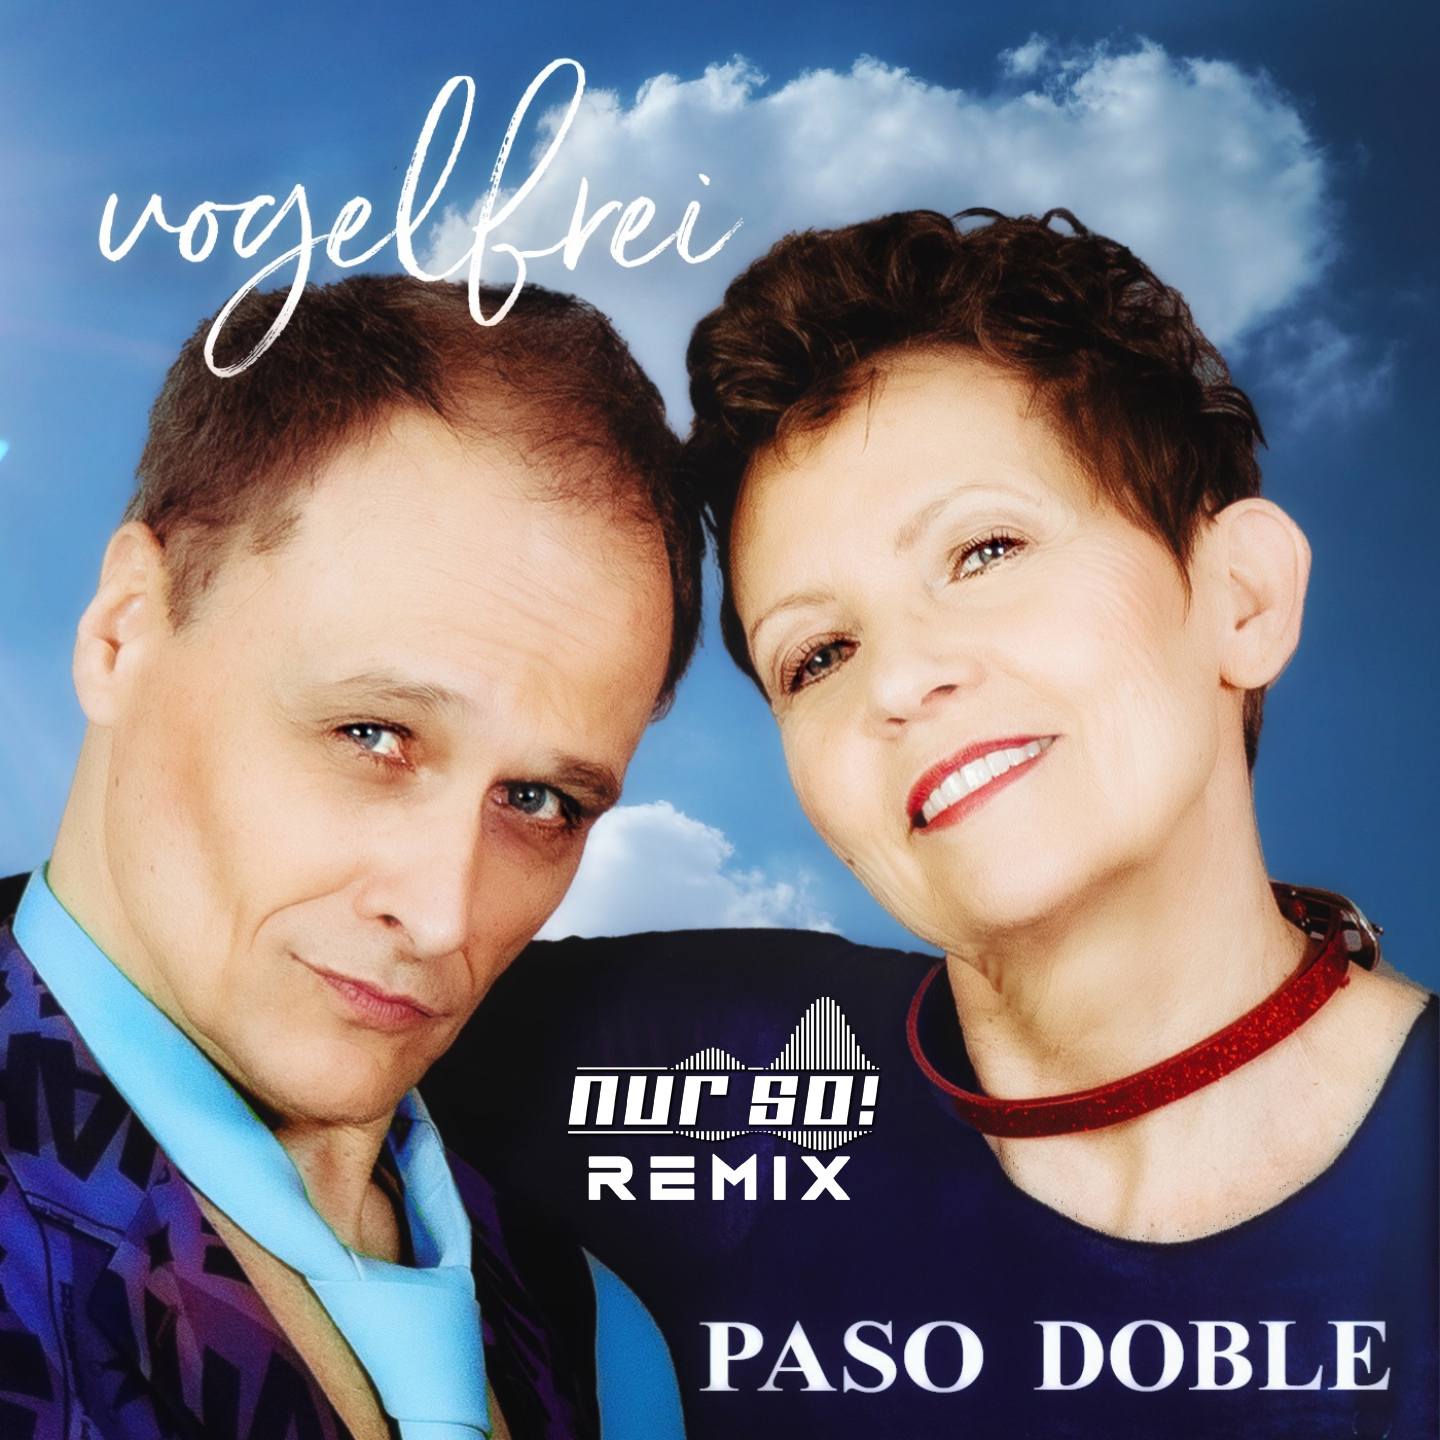 PASO DOBLE * Vogelfrei (Nur So! Remix)  (Download-Track)